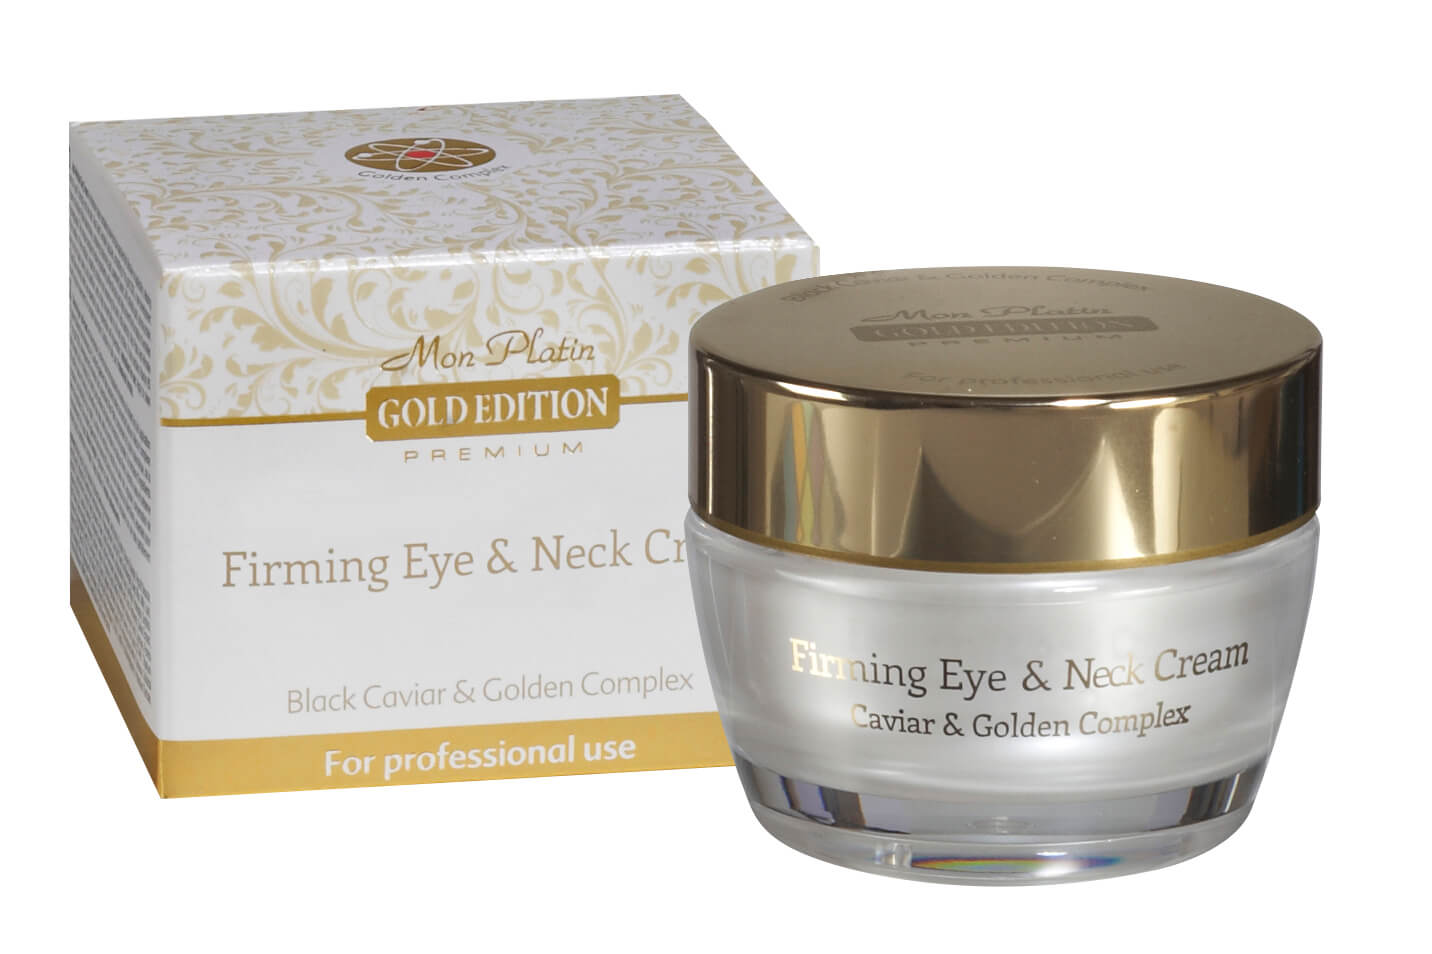 Firming Eye & Neck Cream